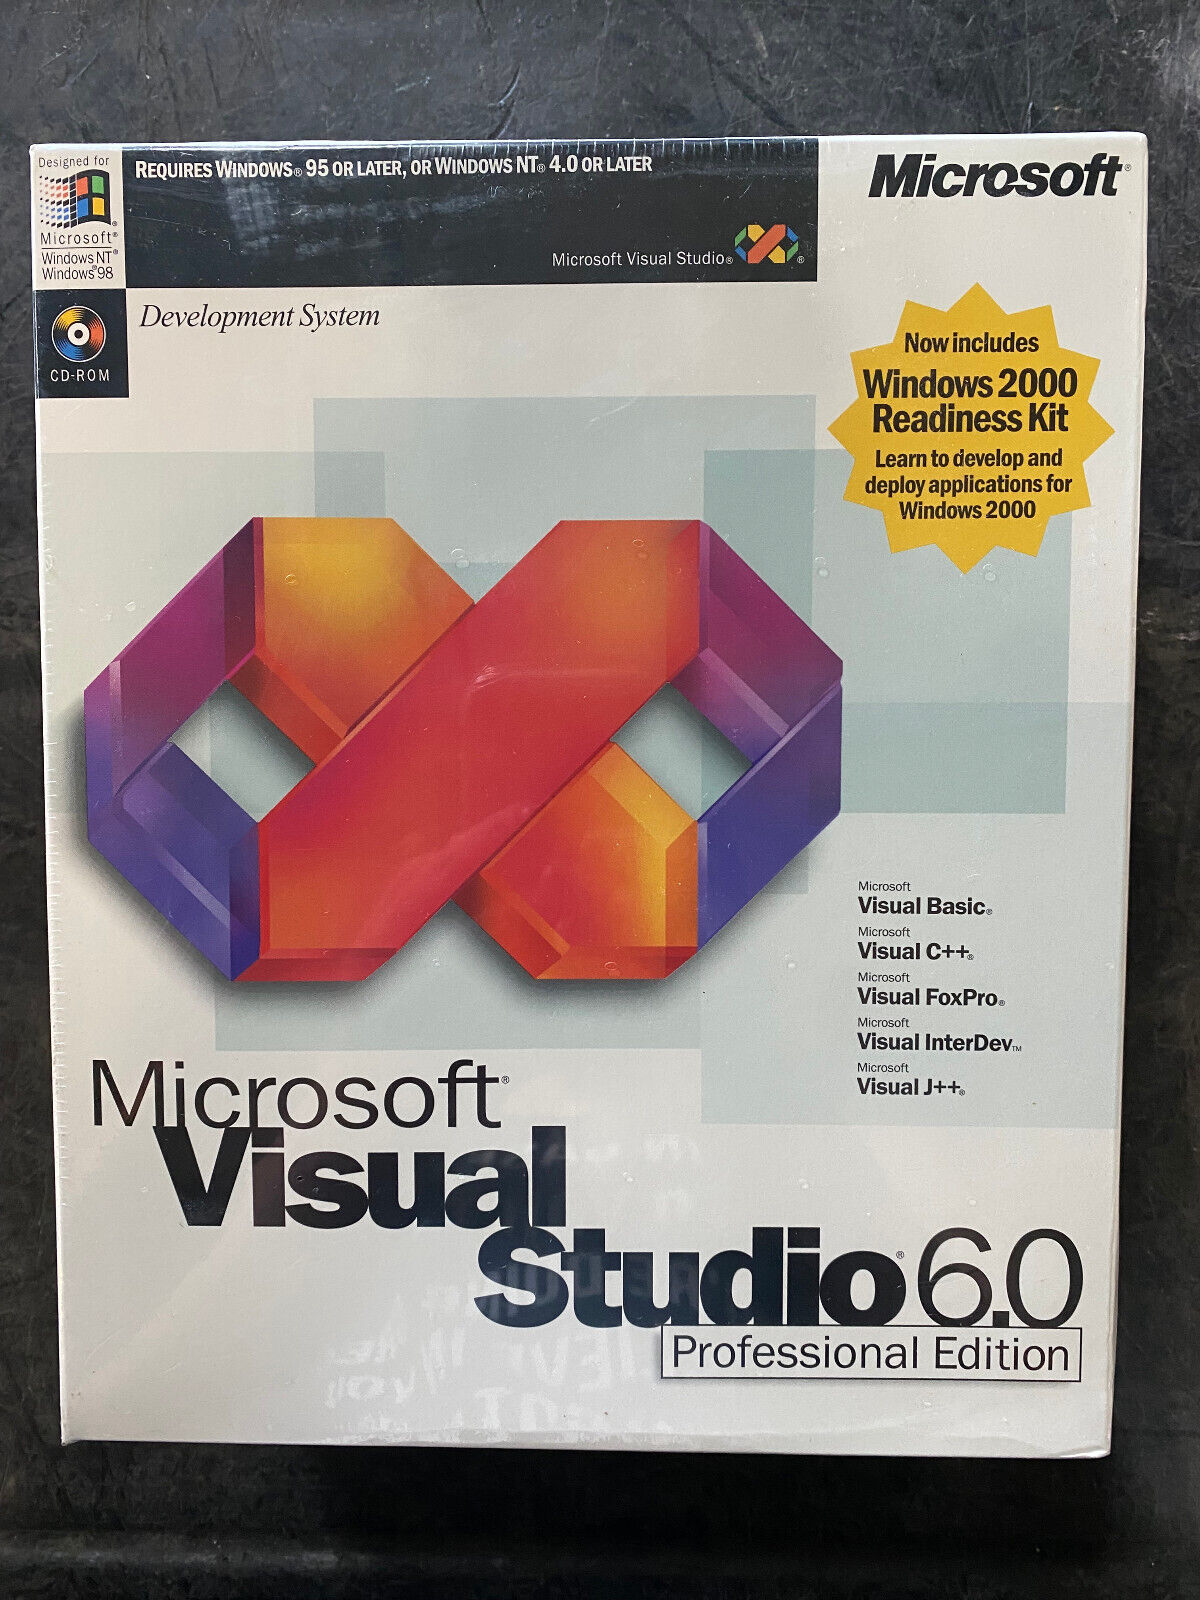 Microsoft Visual Studio 6.0 Model #659-00390 Professional Edition- Brand New